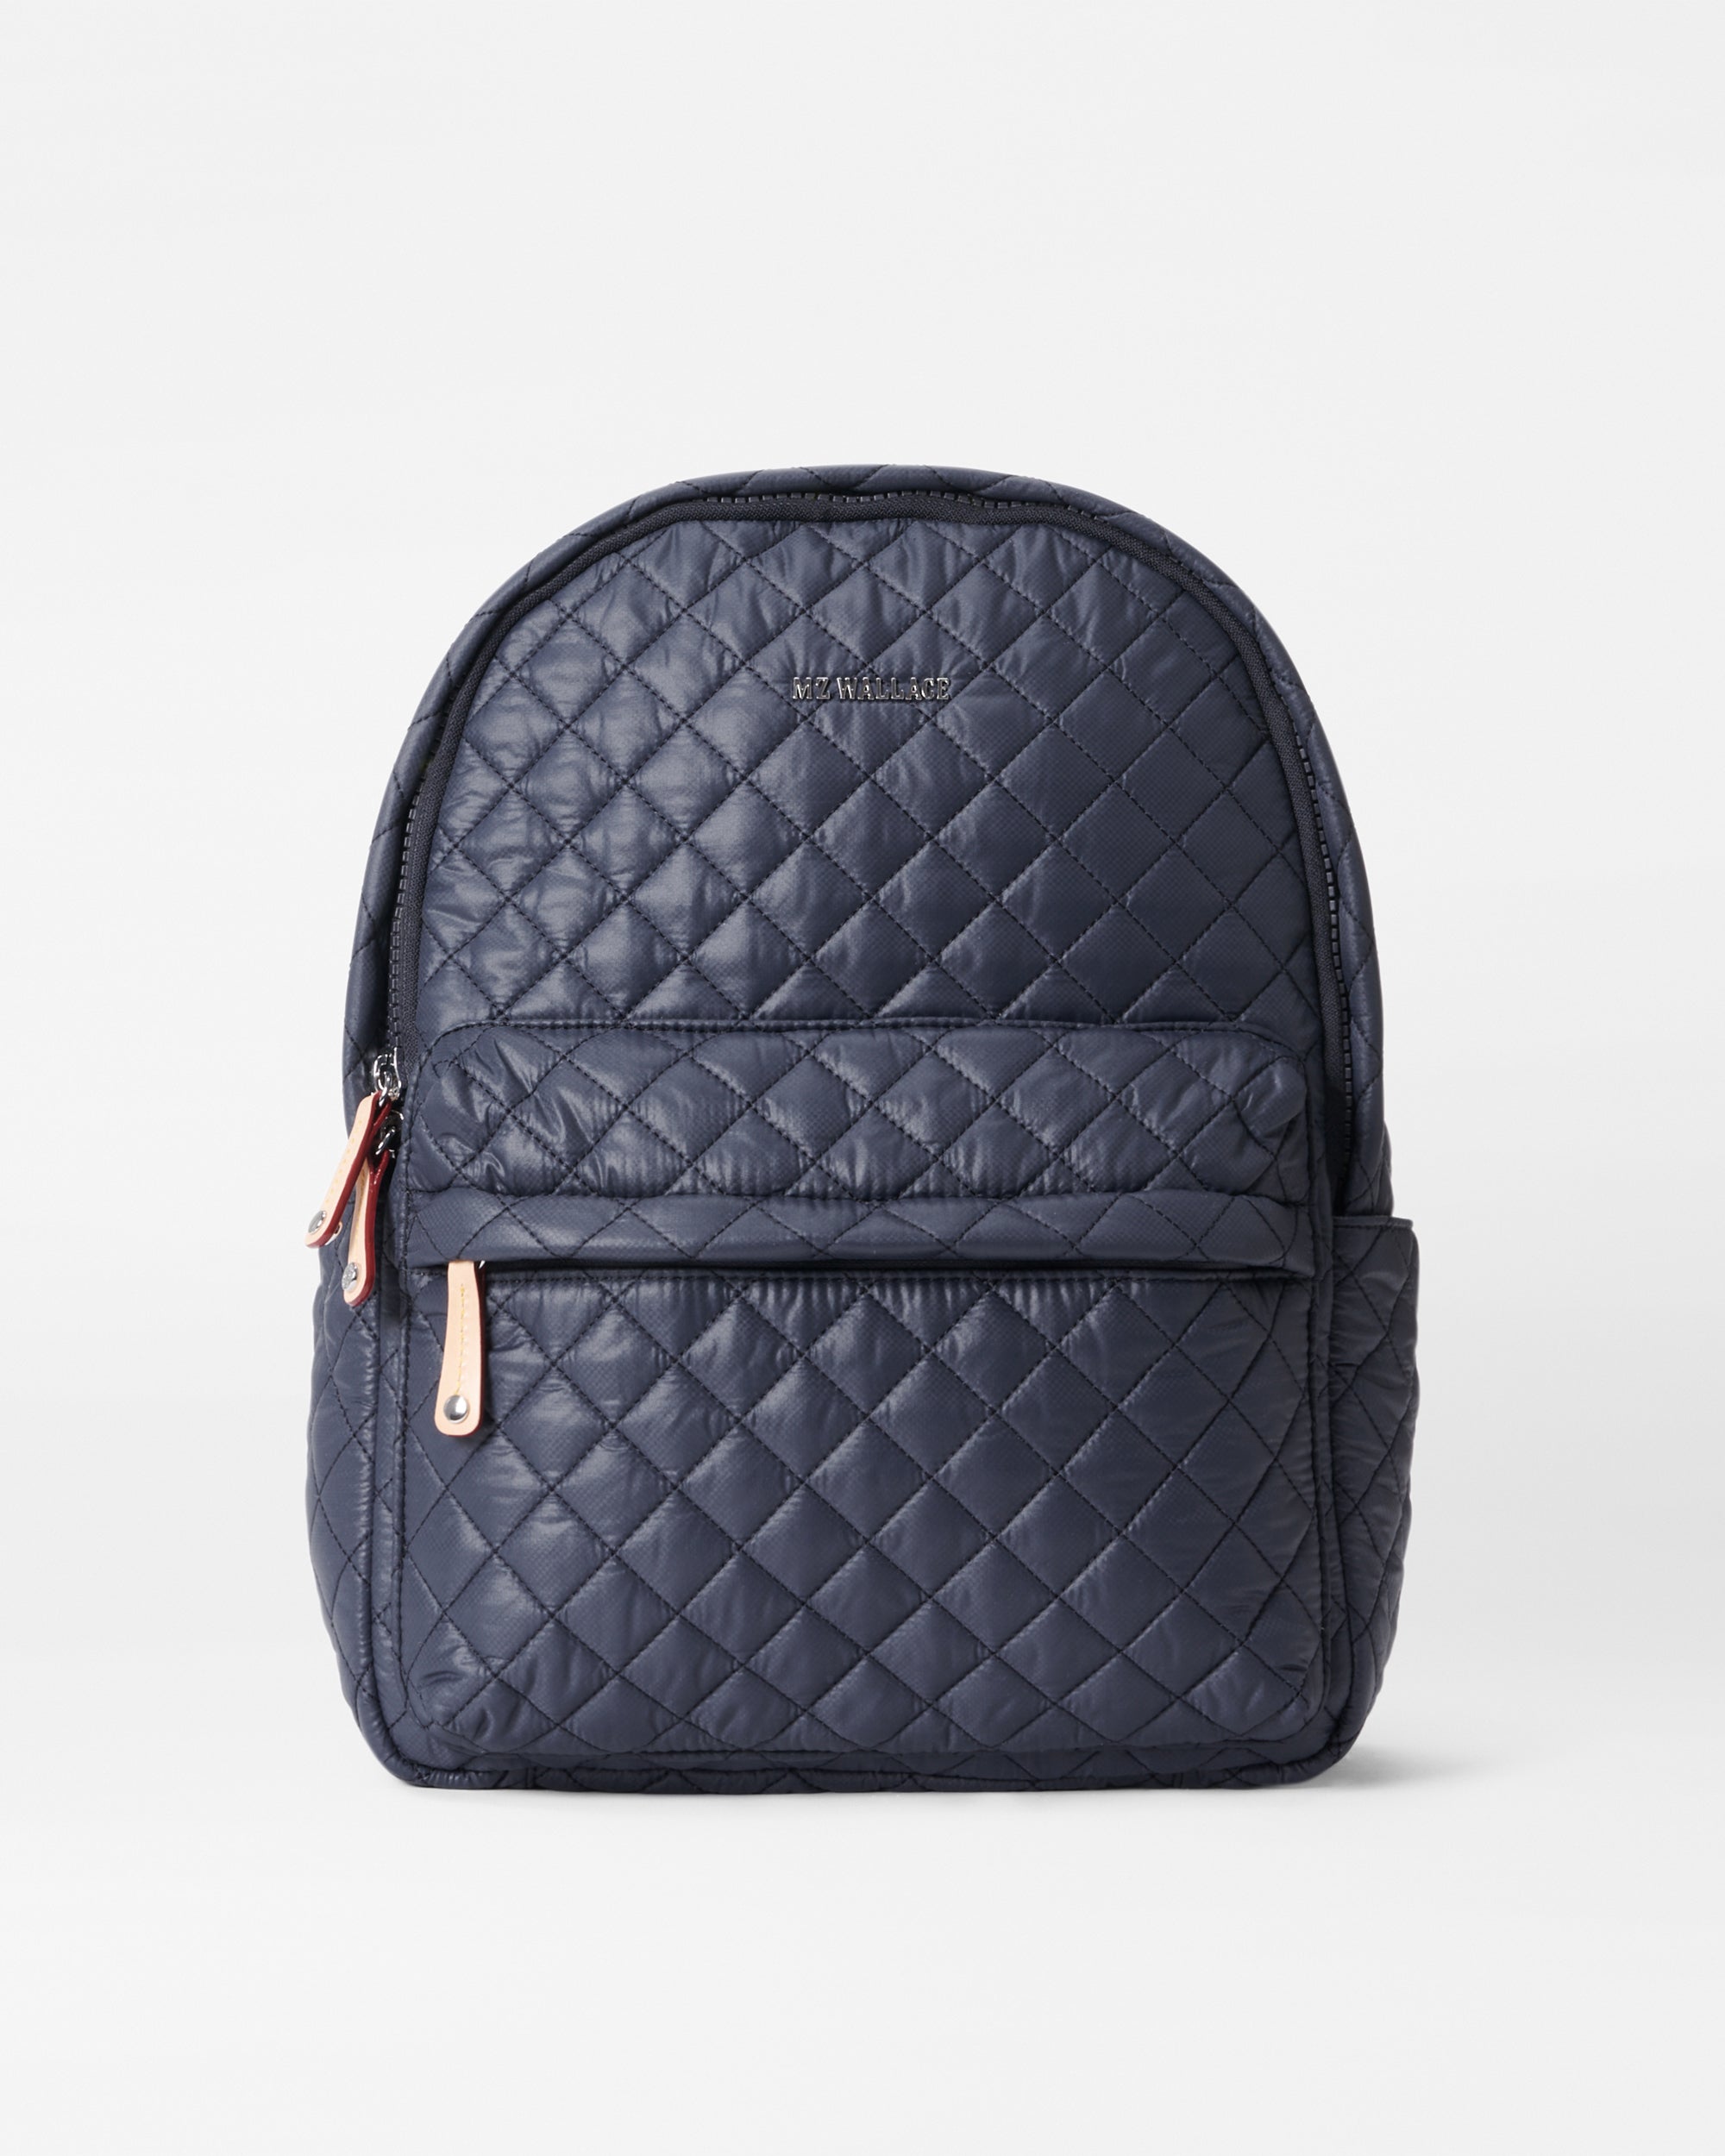  SEEKER MINI BACKPACK BLACK-ASPHALT - women's backpack -  VANS - 28.56 € - outdoorové oblečení a vybavení shop